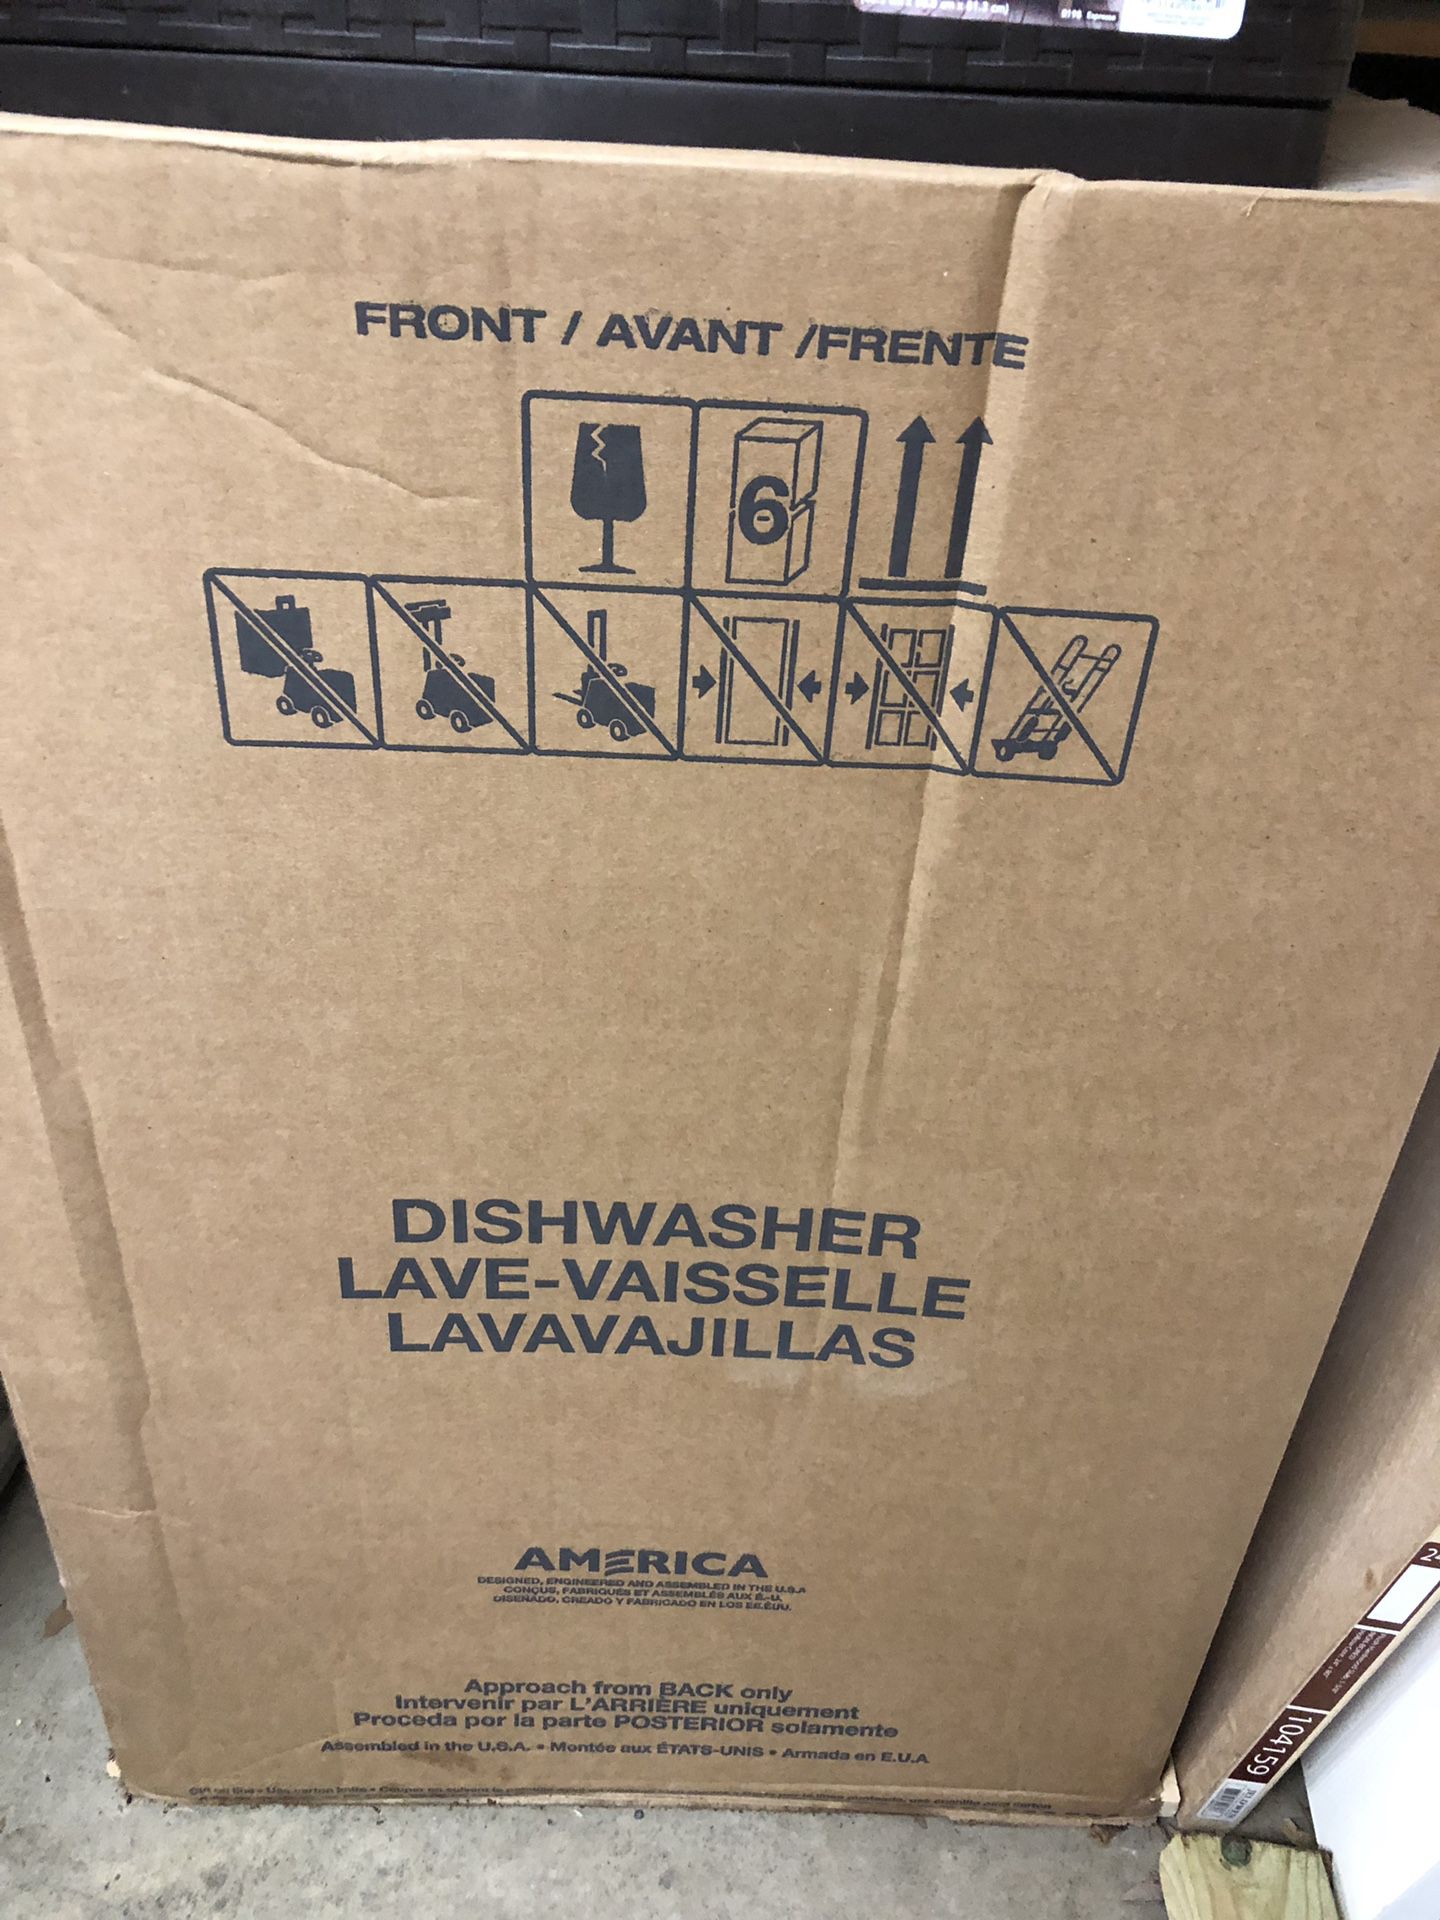 Dishwasher whirlpool